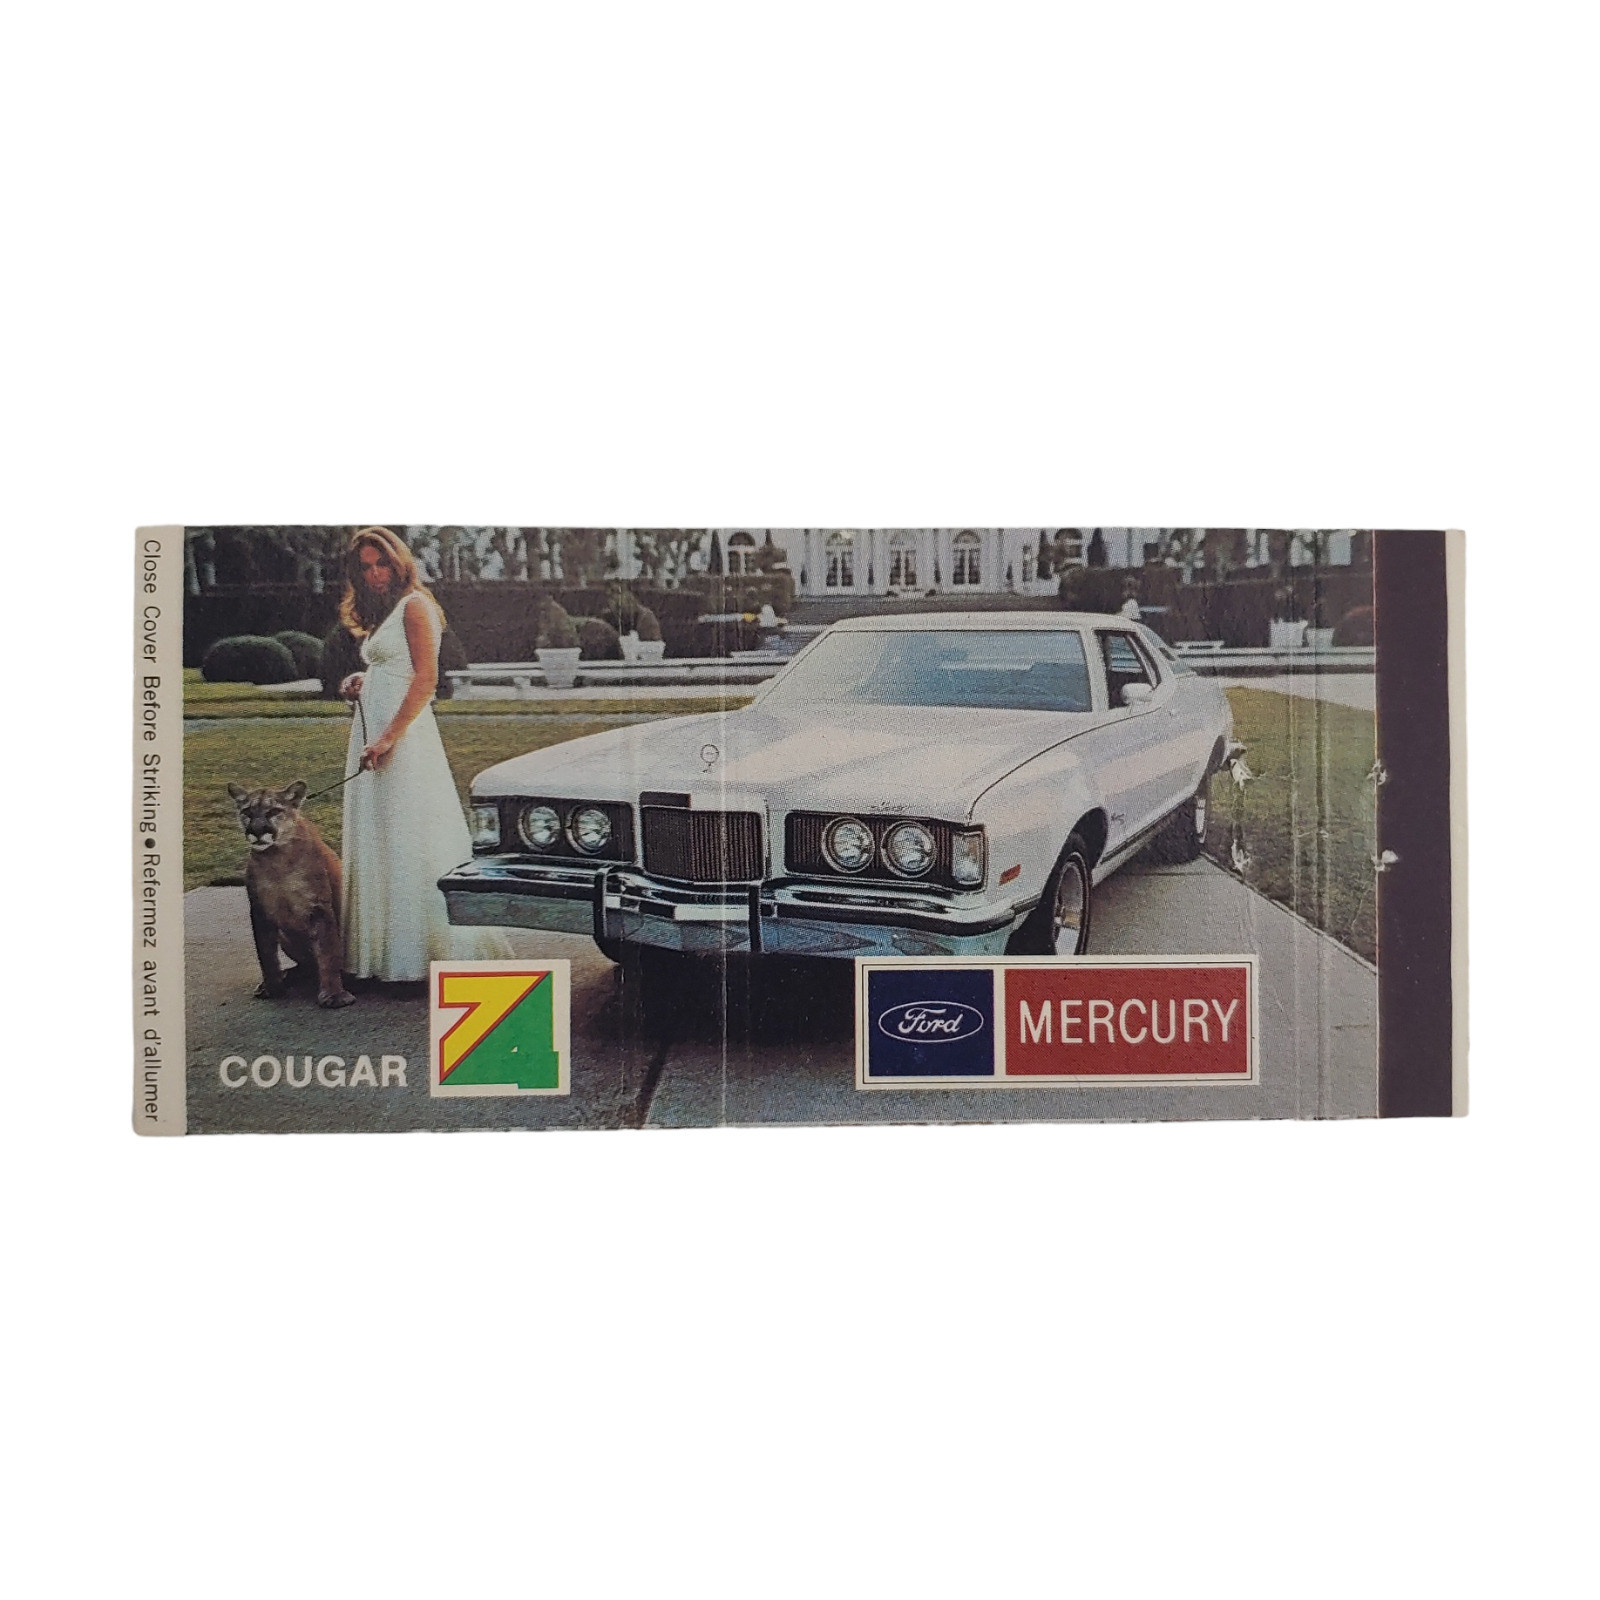 Vintage Matchbook Cover 1974 Mercury Cougar - Jack Hay Motors Limited